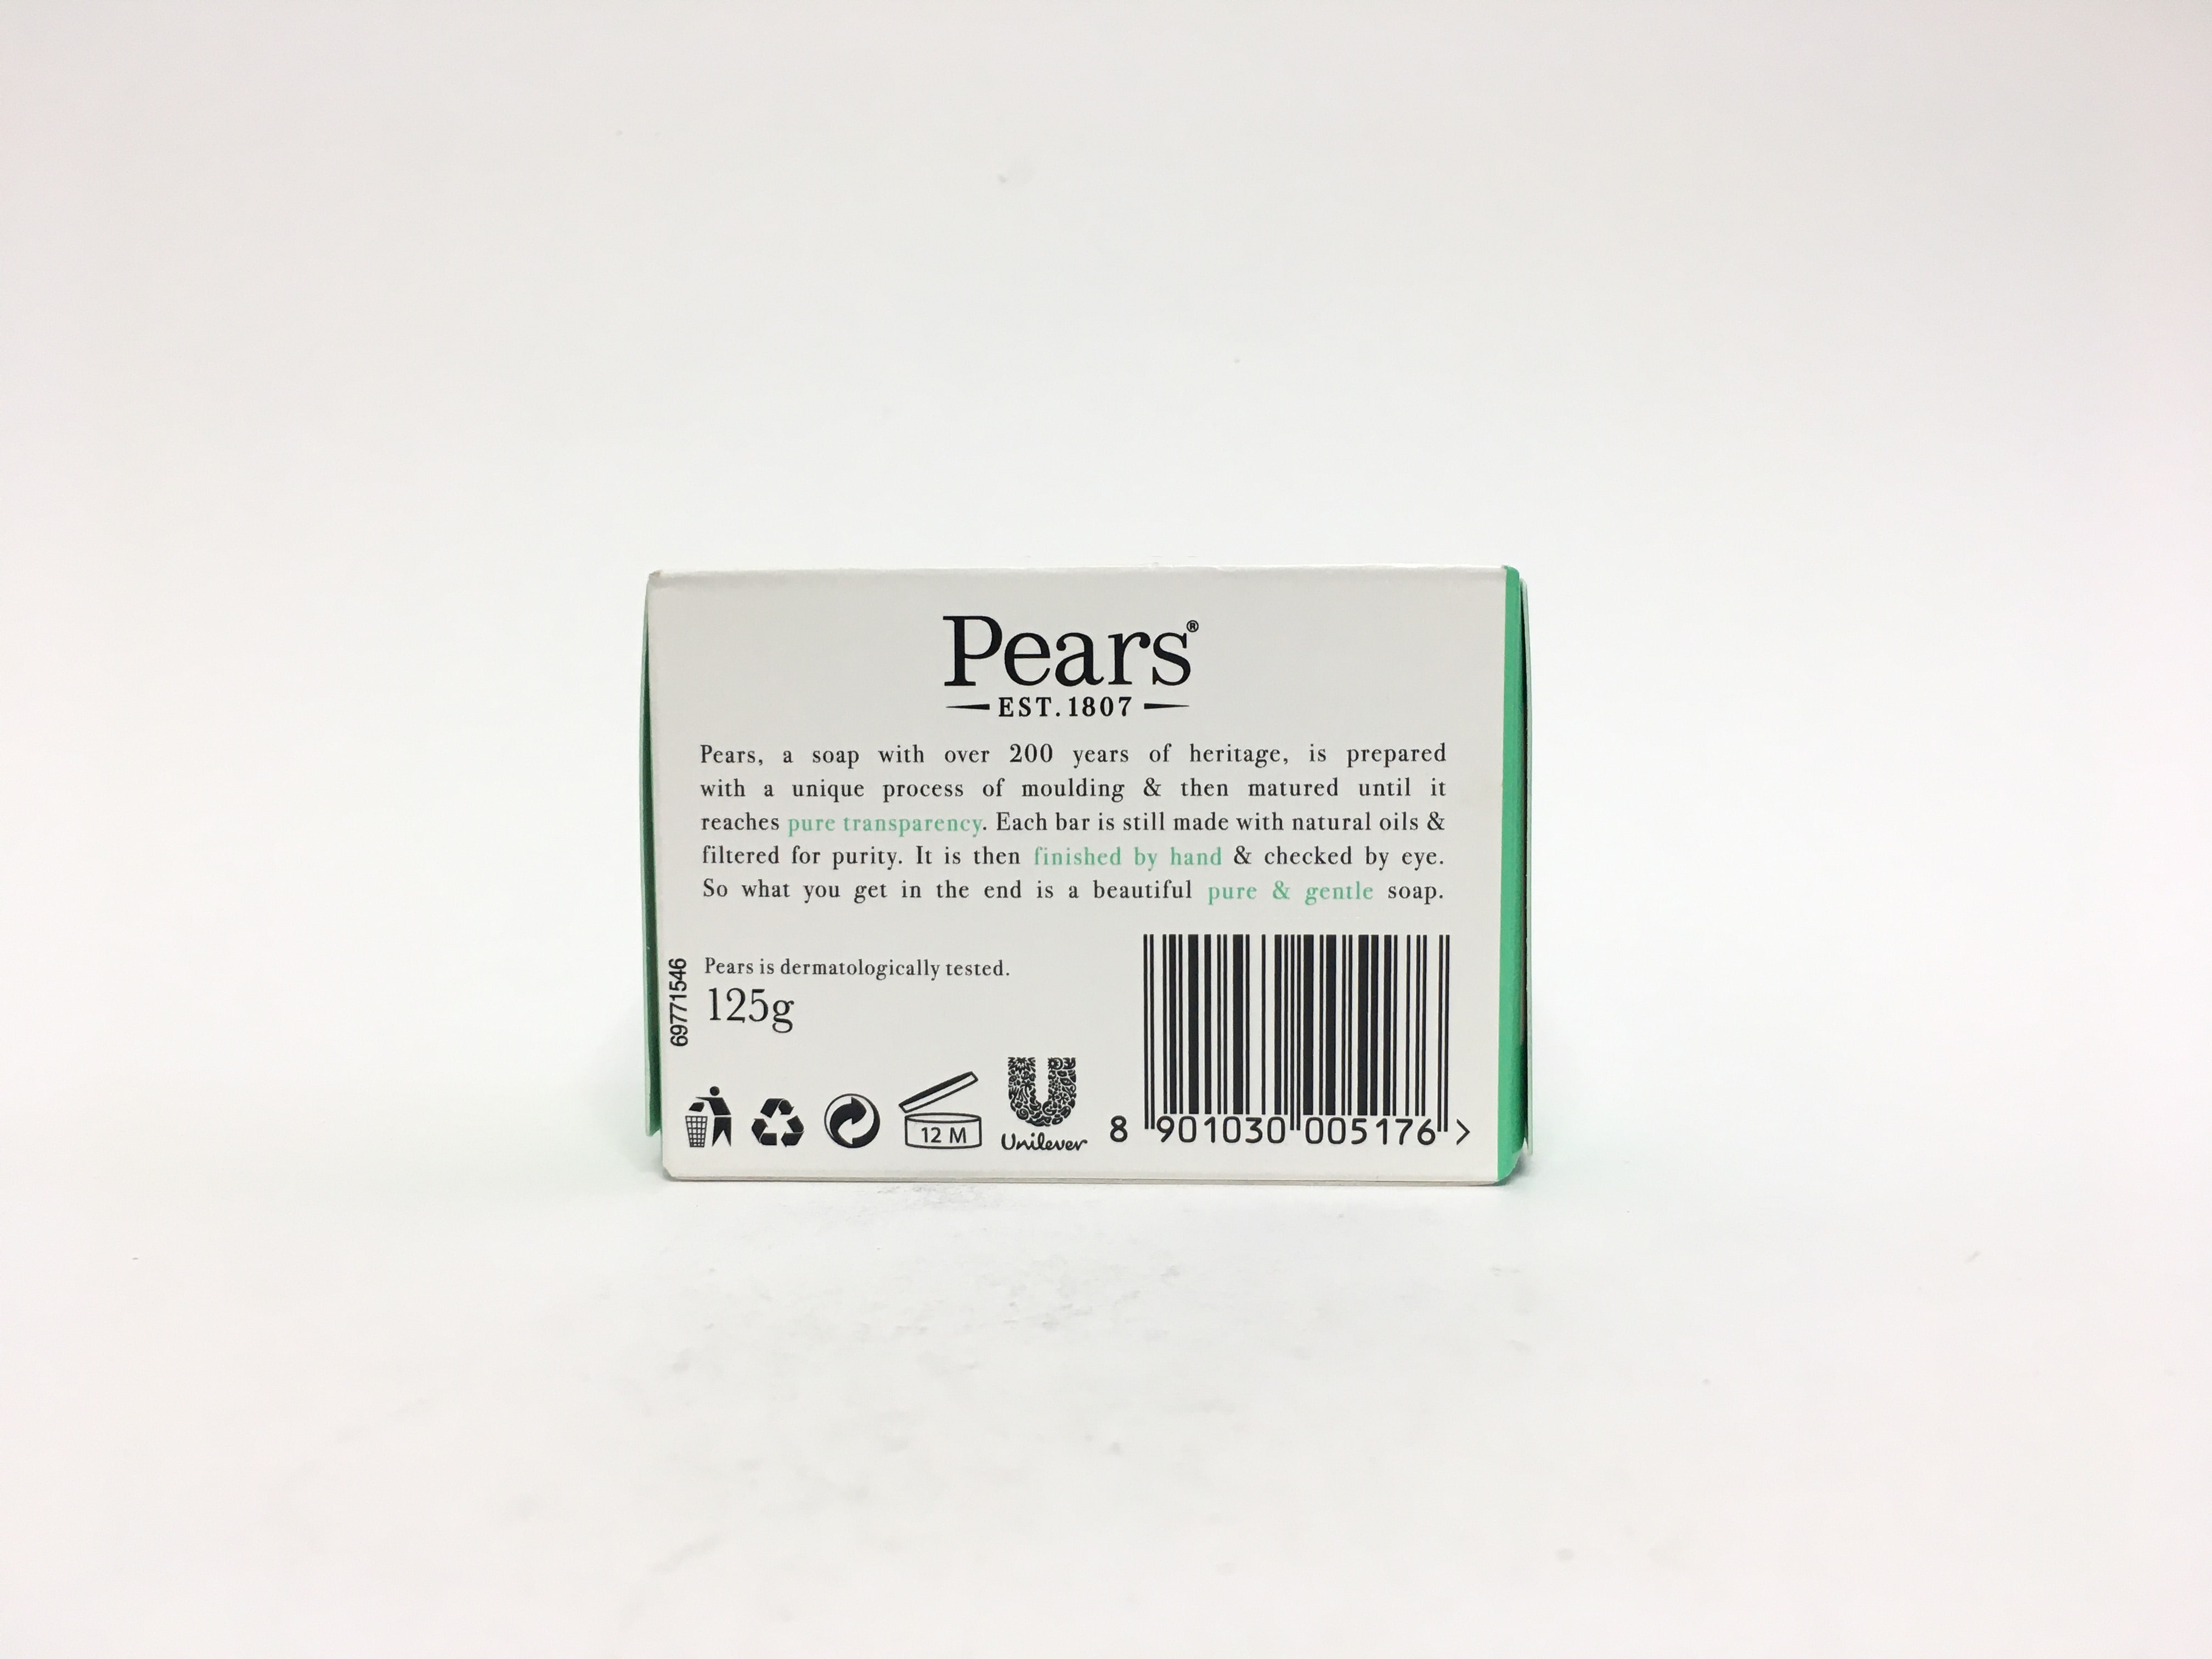 صابون پیرس شفاف کننده پوست خالص و ملایم با عصاره گل لیمو 125 گرمی Pears transparent soap pure & gentle with lemon flower extracts